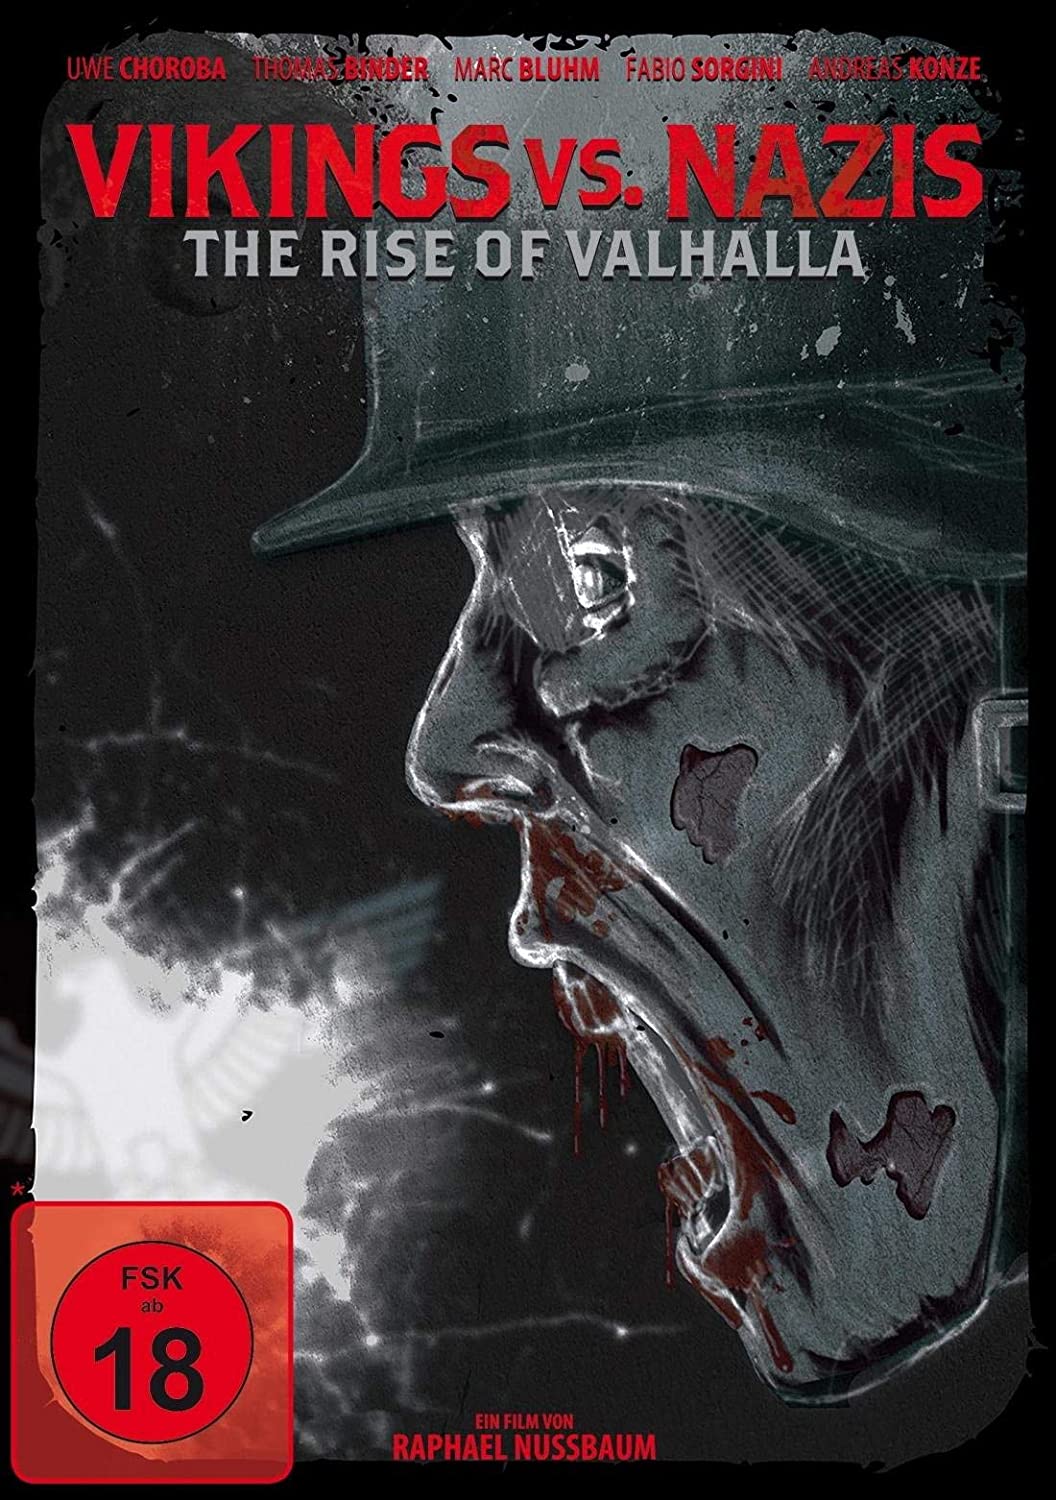 Vikings vs. Nazis – The Rise of Valhalla – DVD Cover